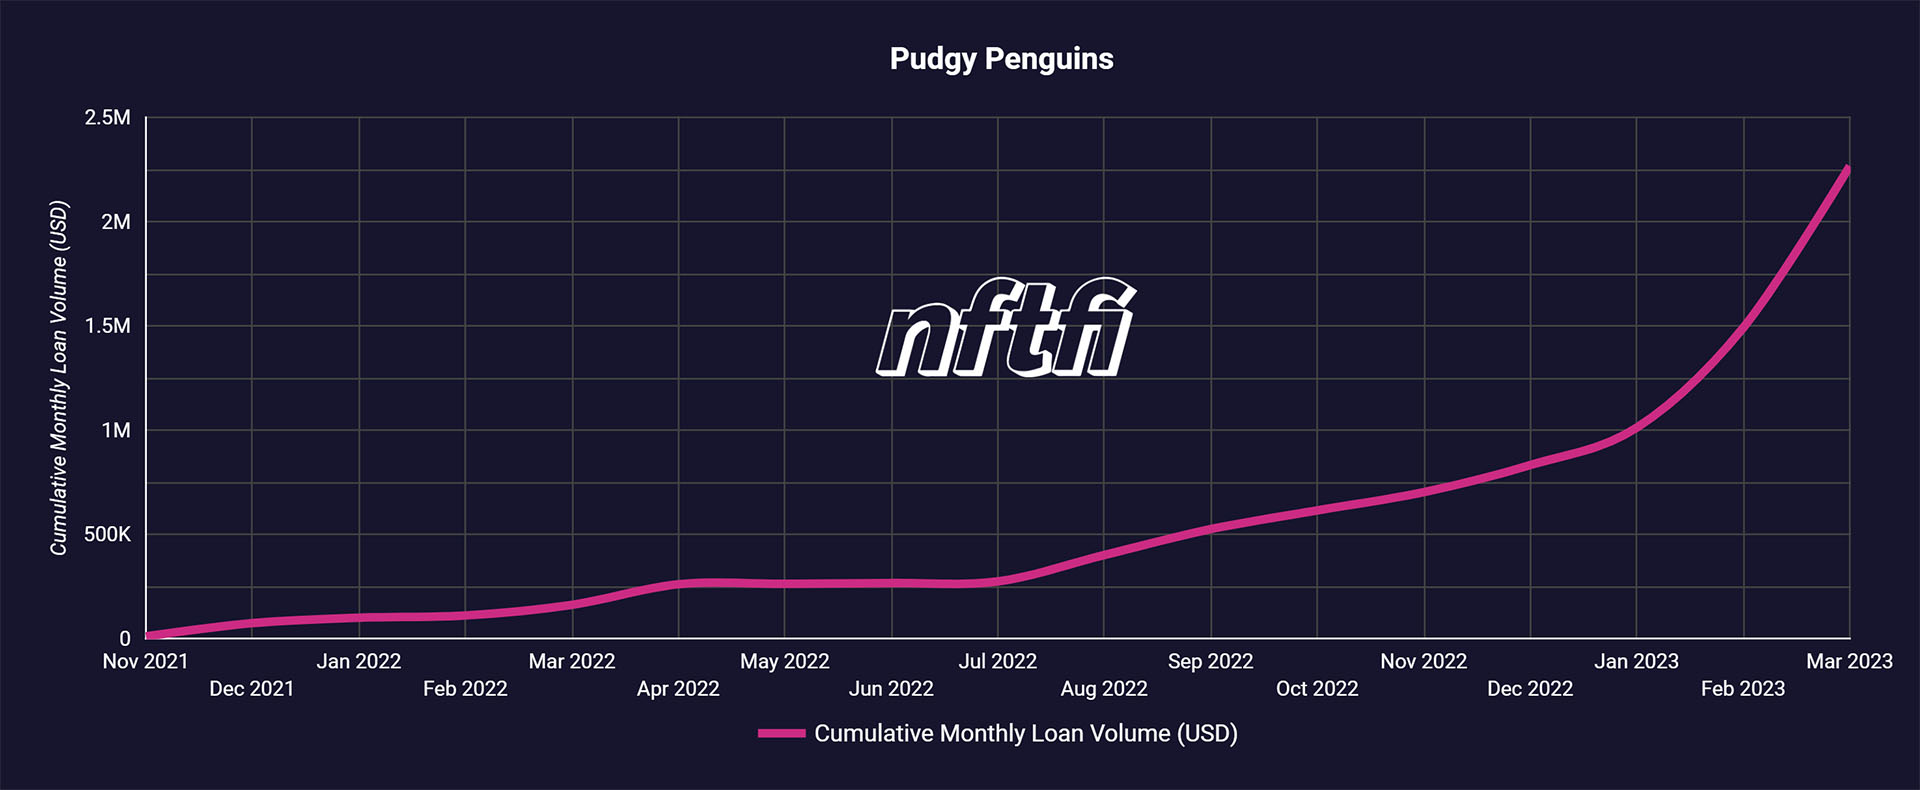 Pudgy Penguins NFTfi total loan volume